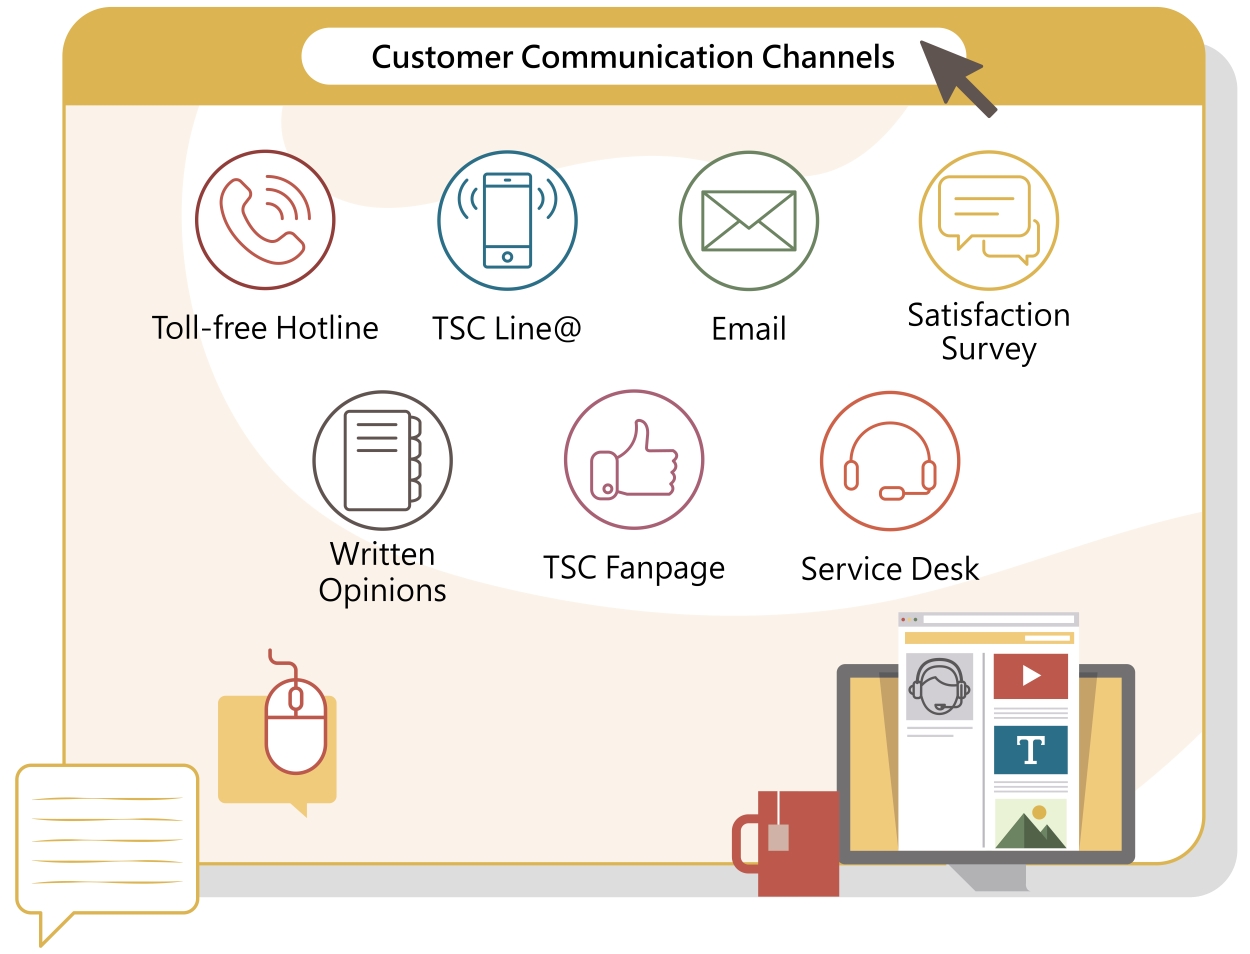 Customer communication channels